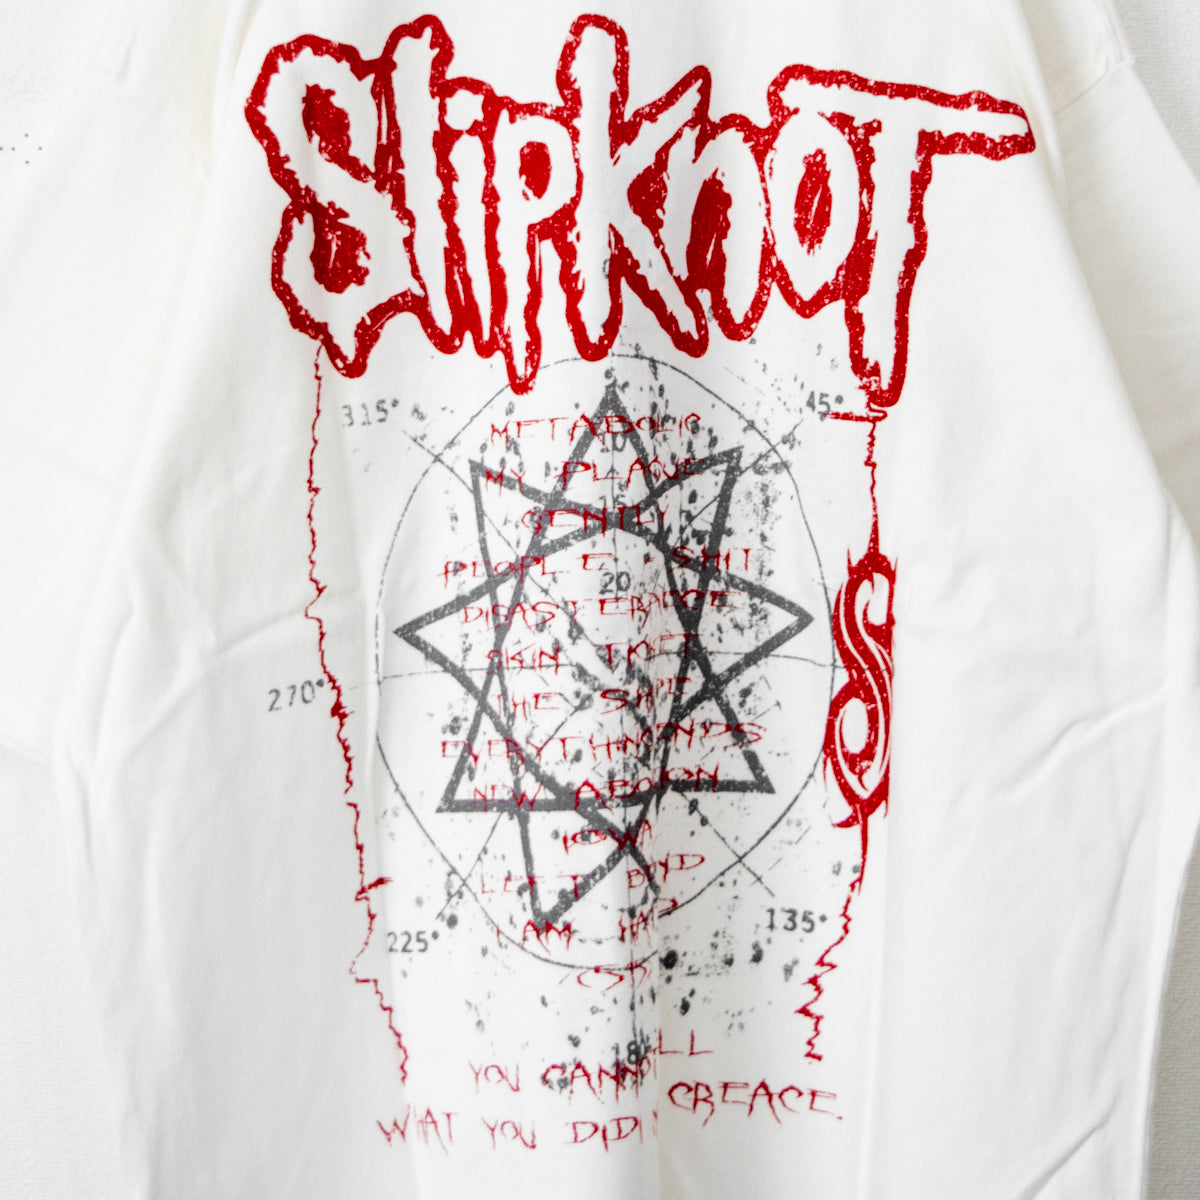 Slipknot Logo T-shirt T-shirt WHITE